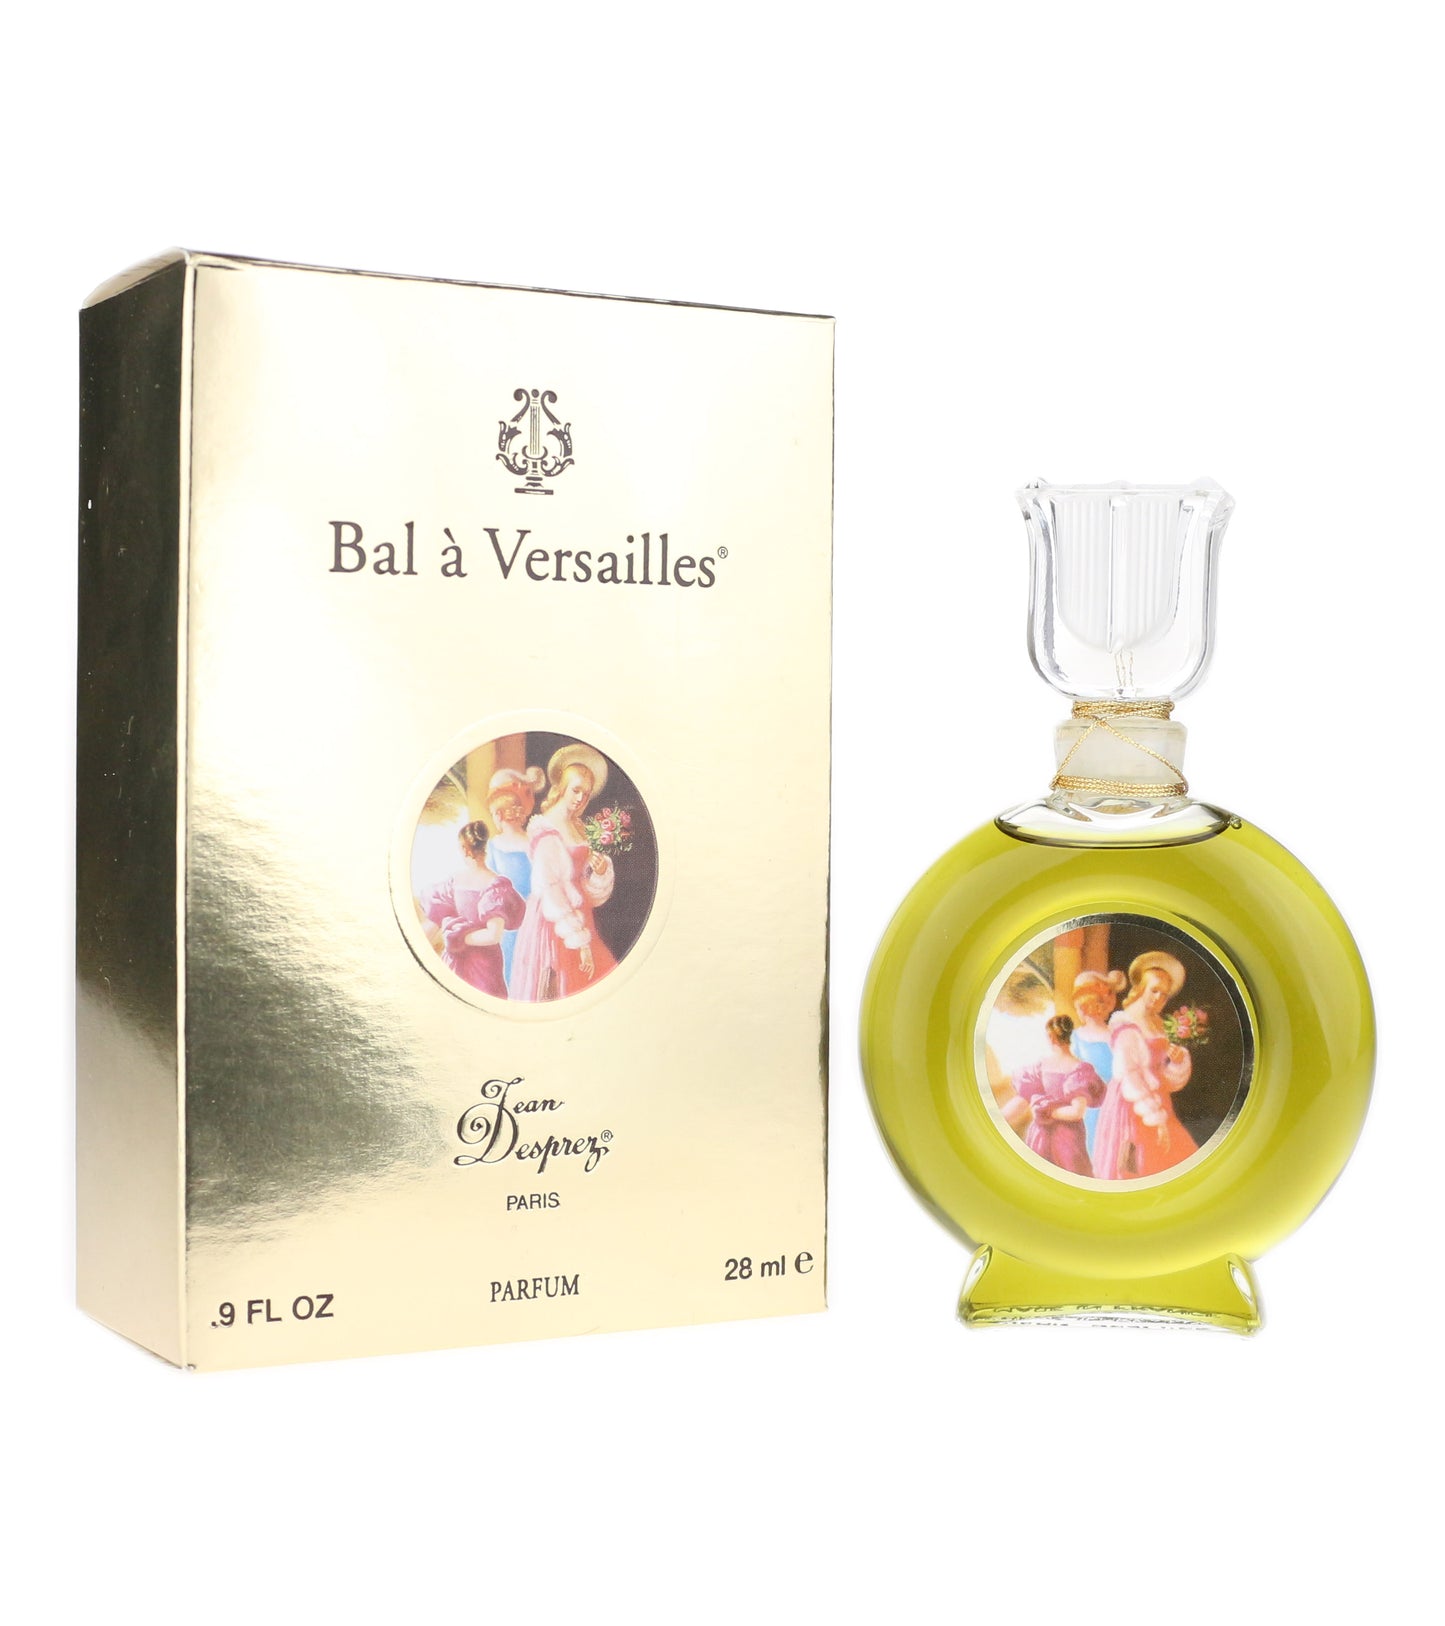 Jean Desprez 'Bal a Versailles' Parfum Splash 0.9oz/28ml New In Box(Pure Parfum)